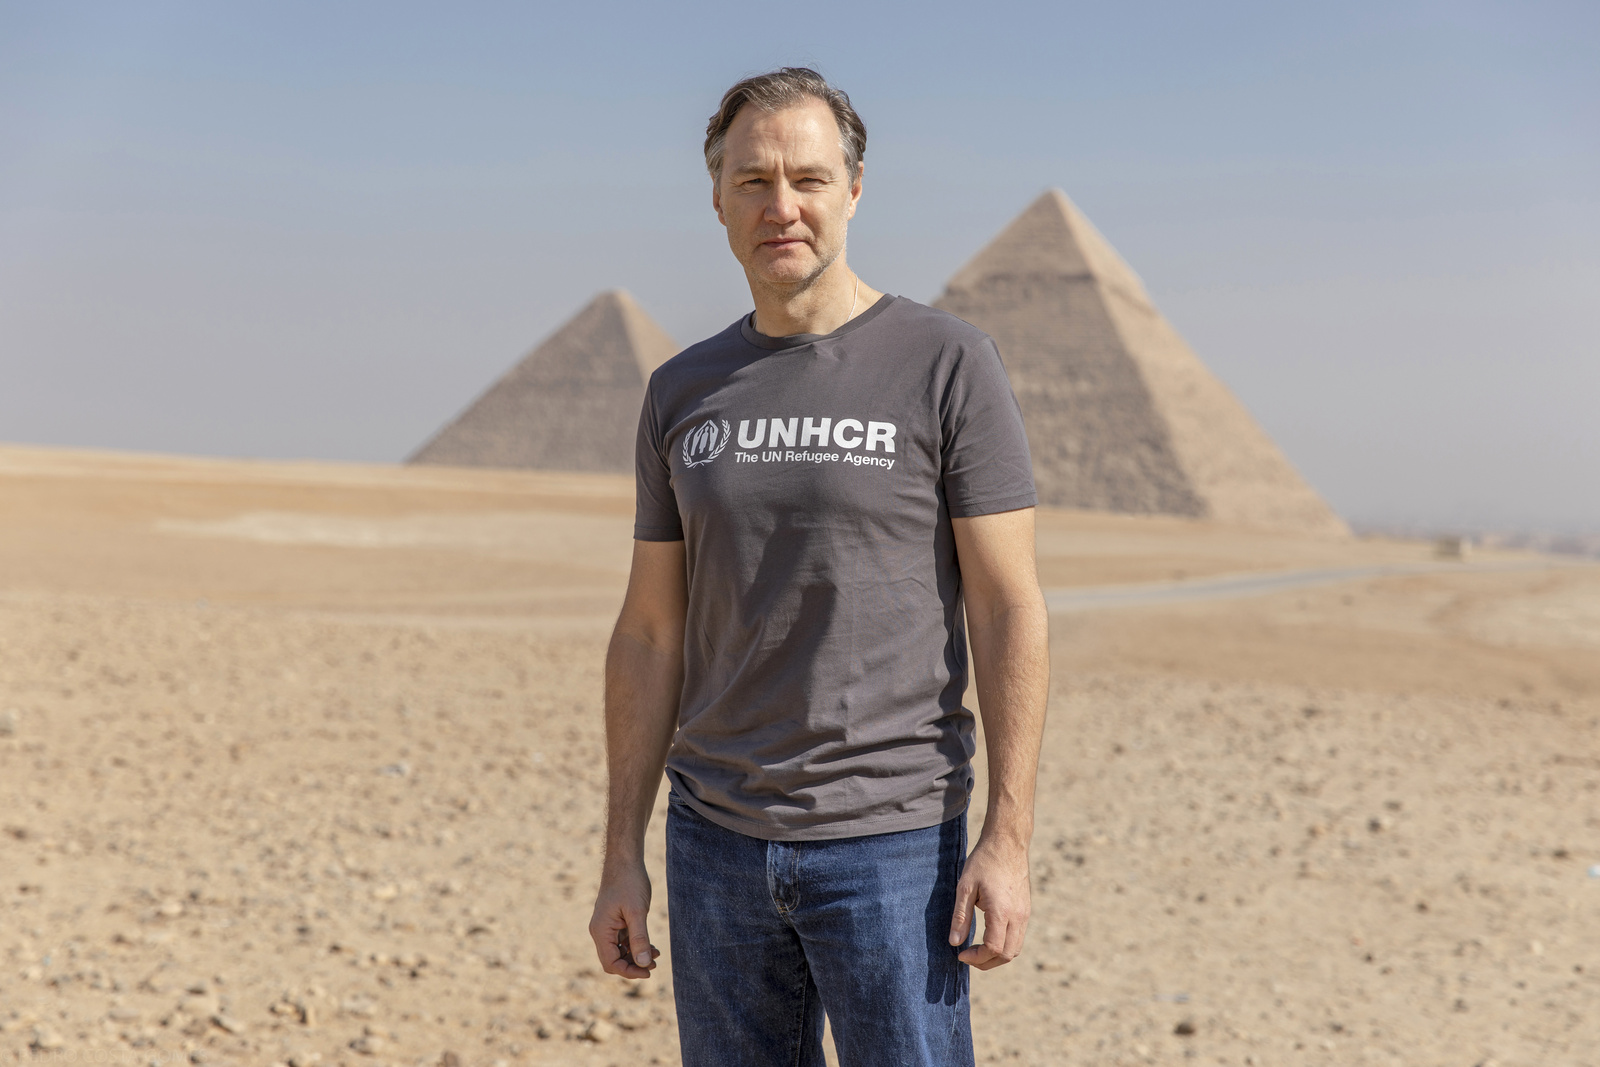 UNHCR Goodwill Ambassador David Morrissey visits Cairo